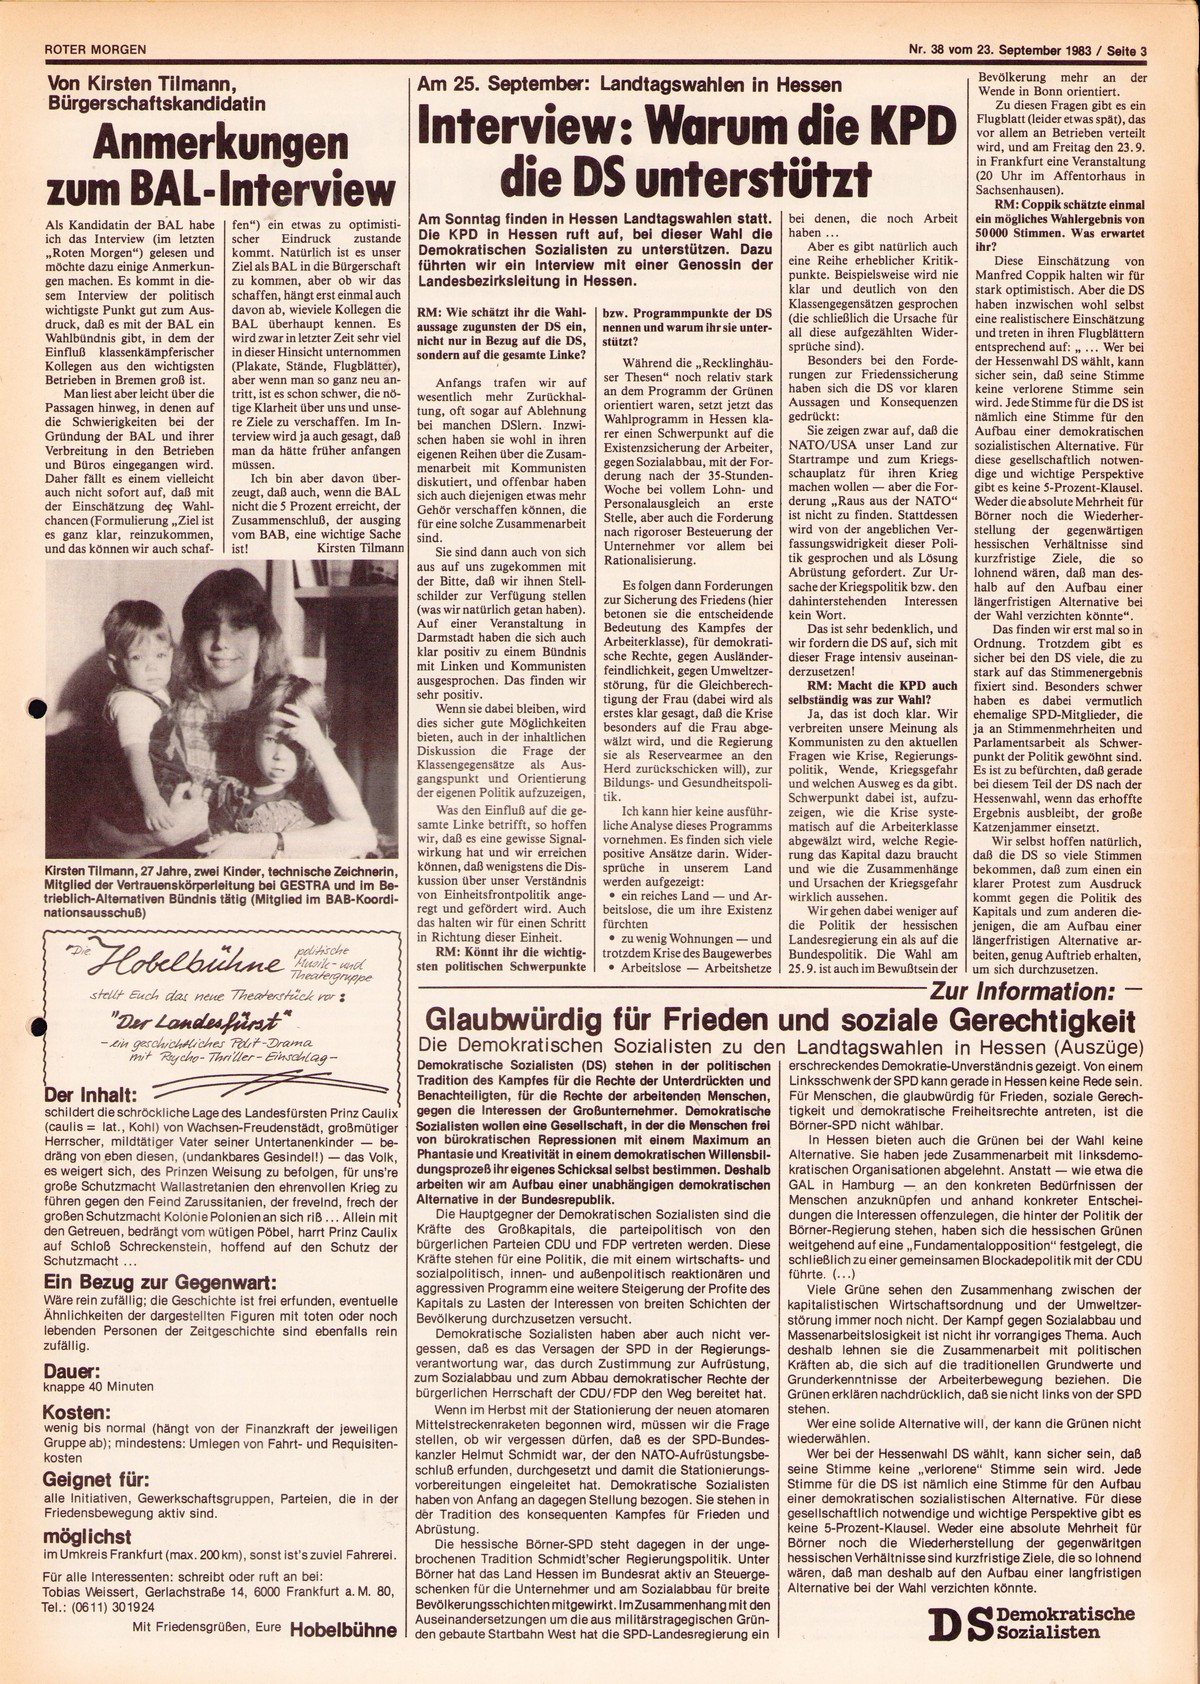 Roter Morgen, 17. Jg., 23. September 1983, Nr. 38, Seite 3